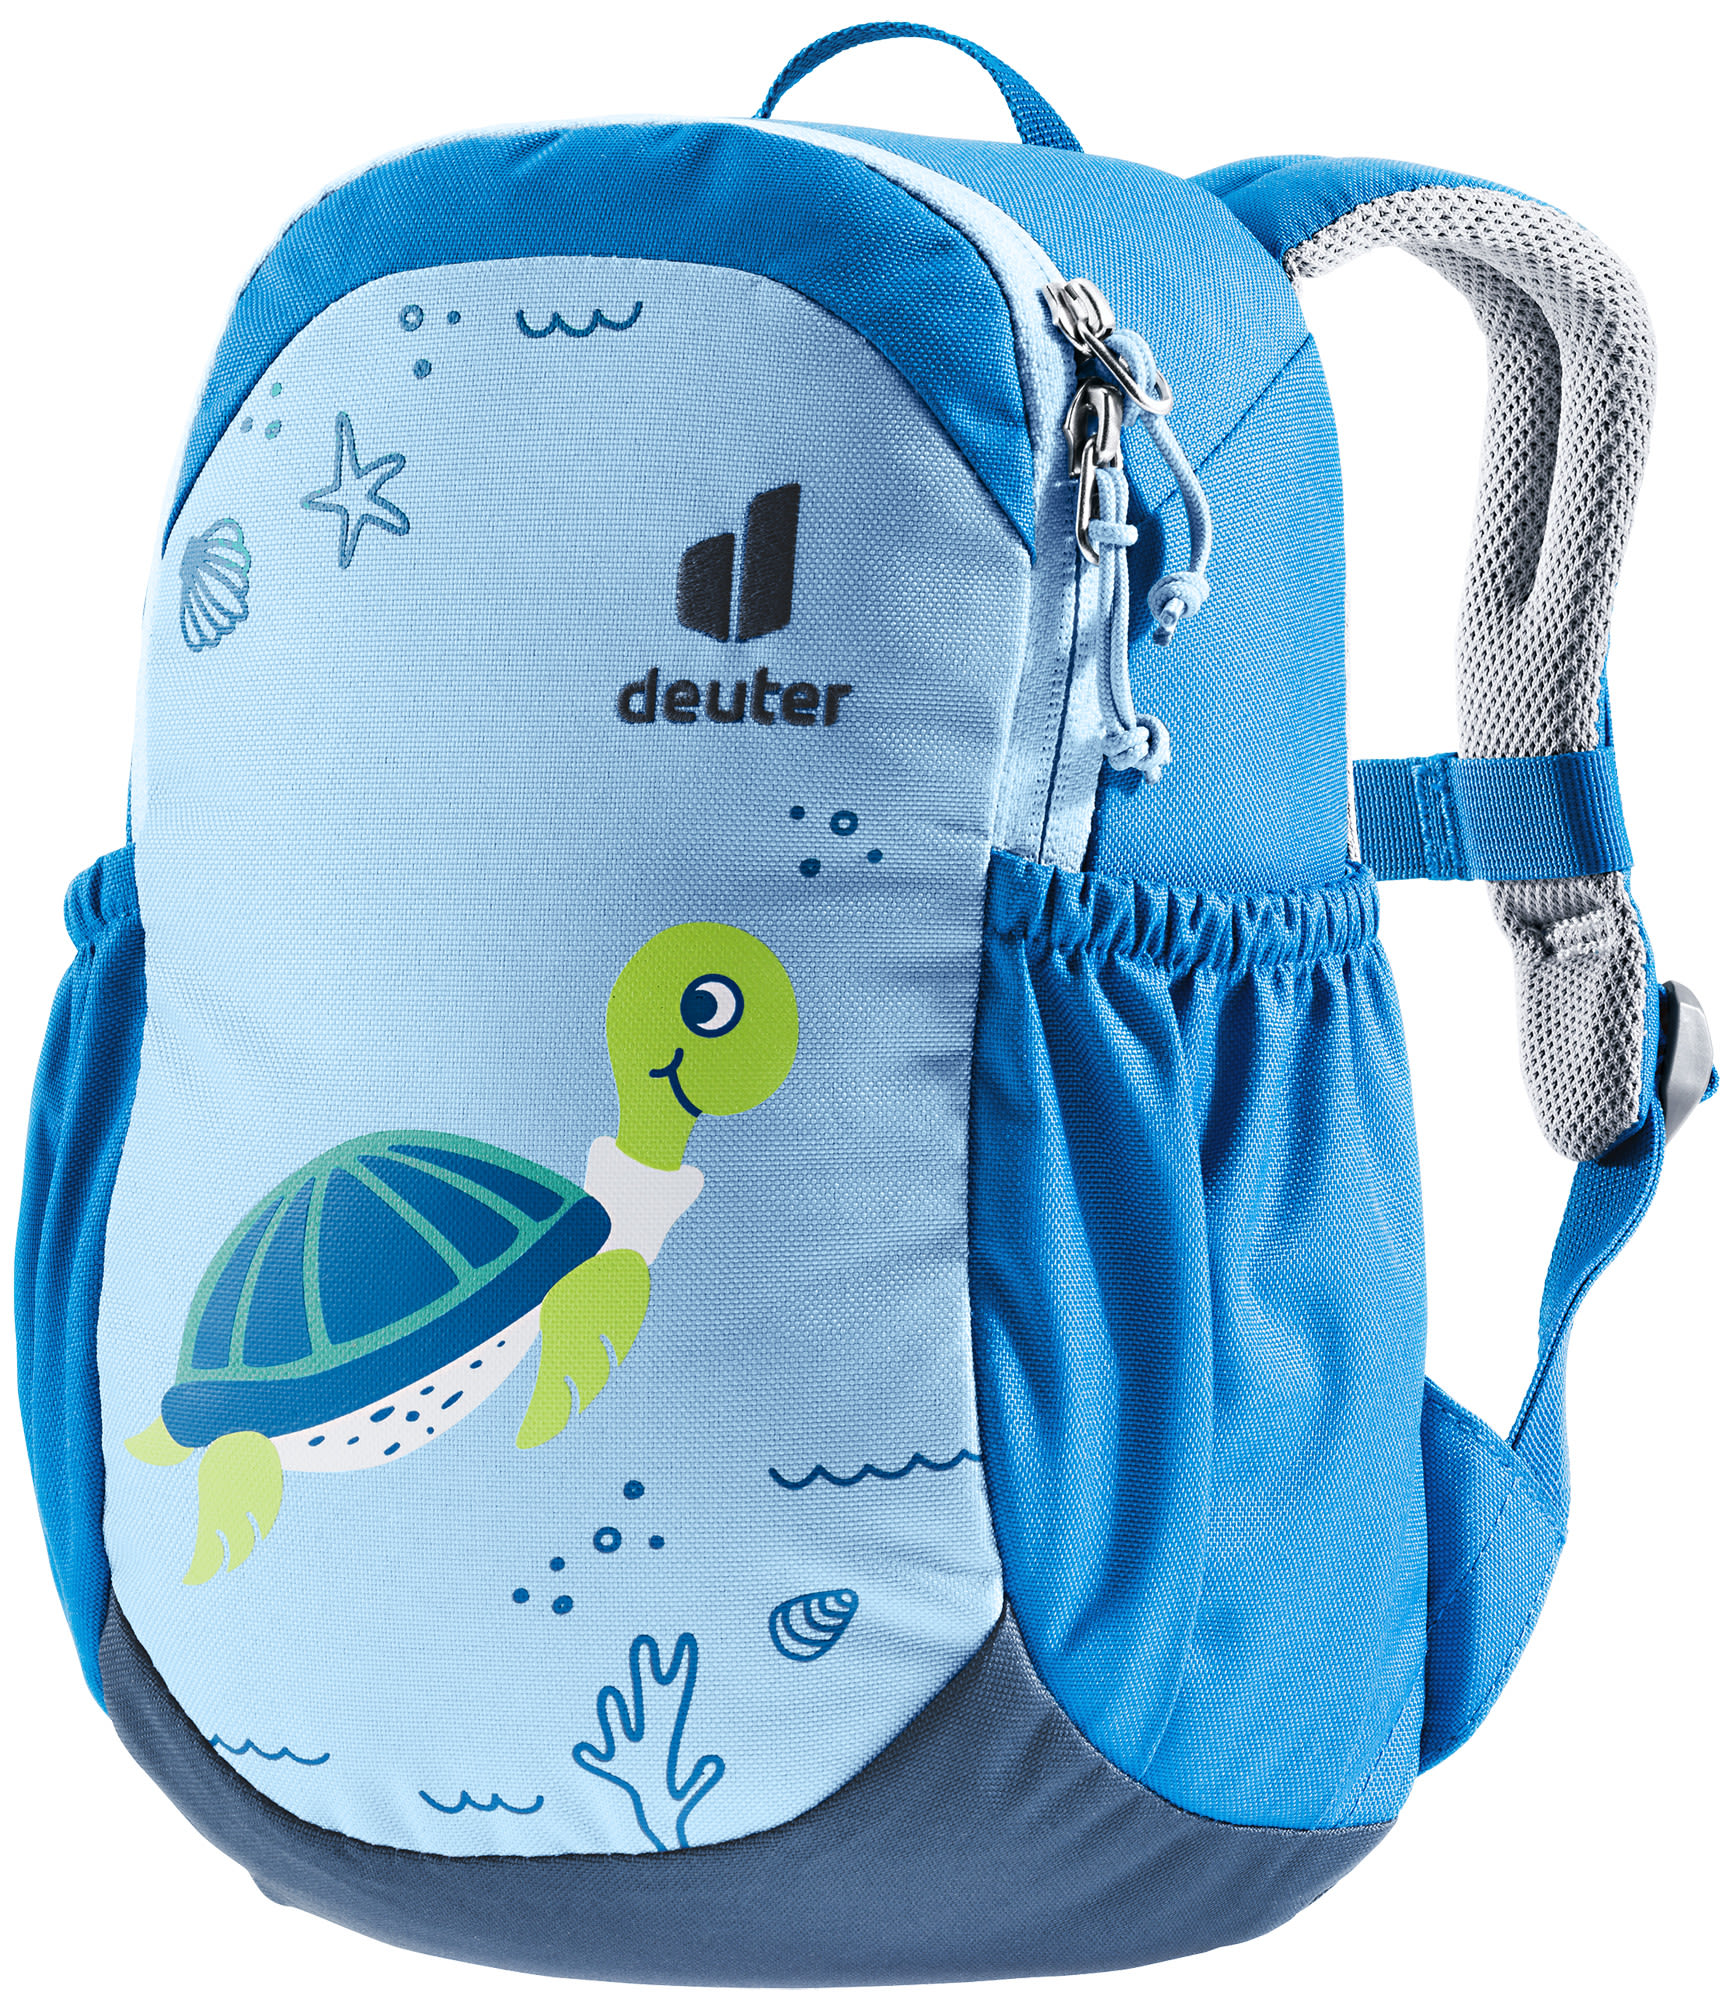 Deuter Pico Blau | Größe 5l | Kinder Rucksack